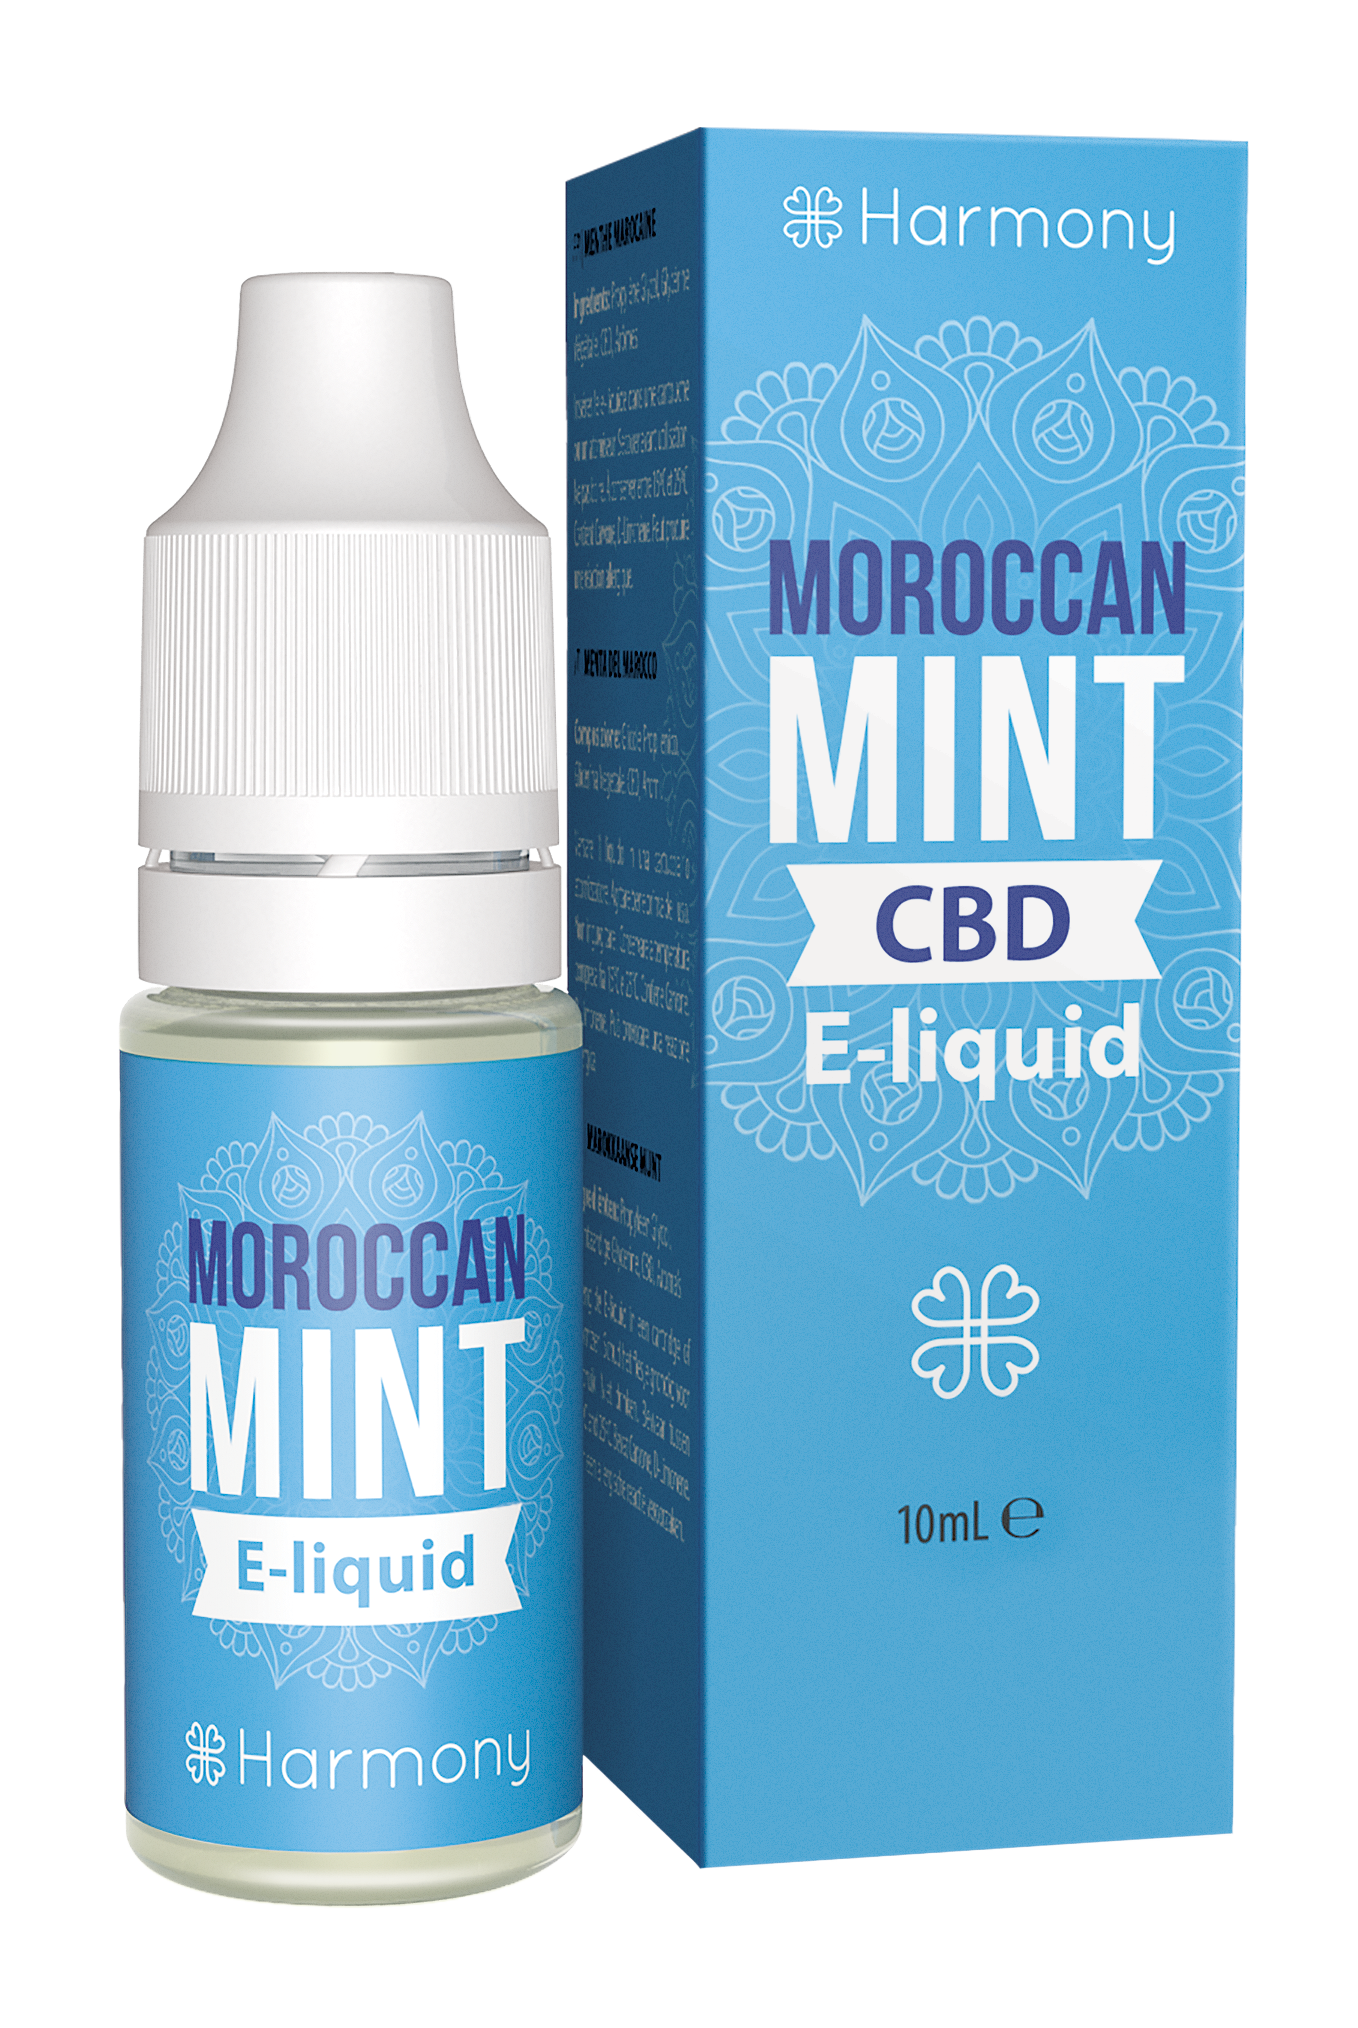 Harmony Moroccan Mint E-liquid 10ml 30mg